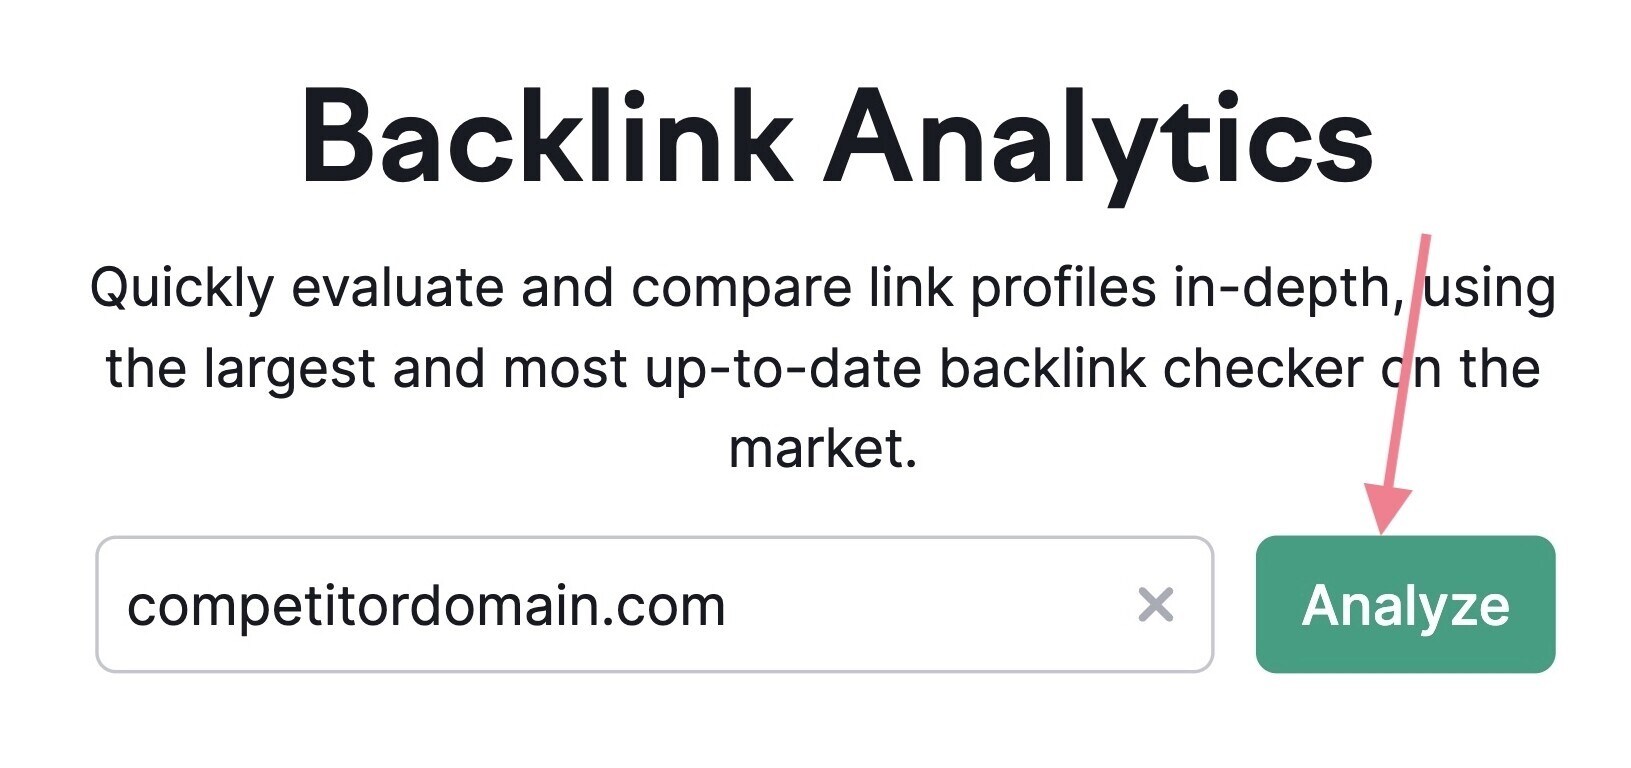 backlink analytics tool competitors domain